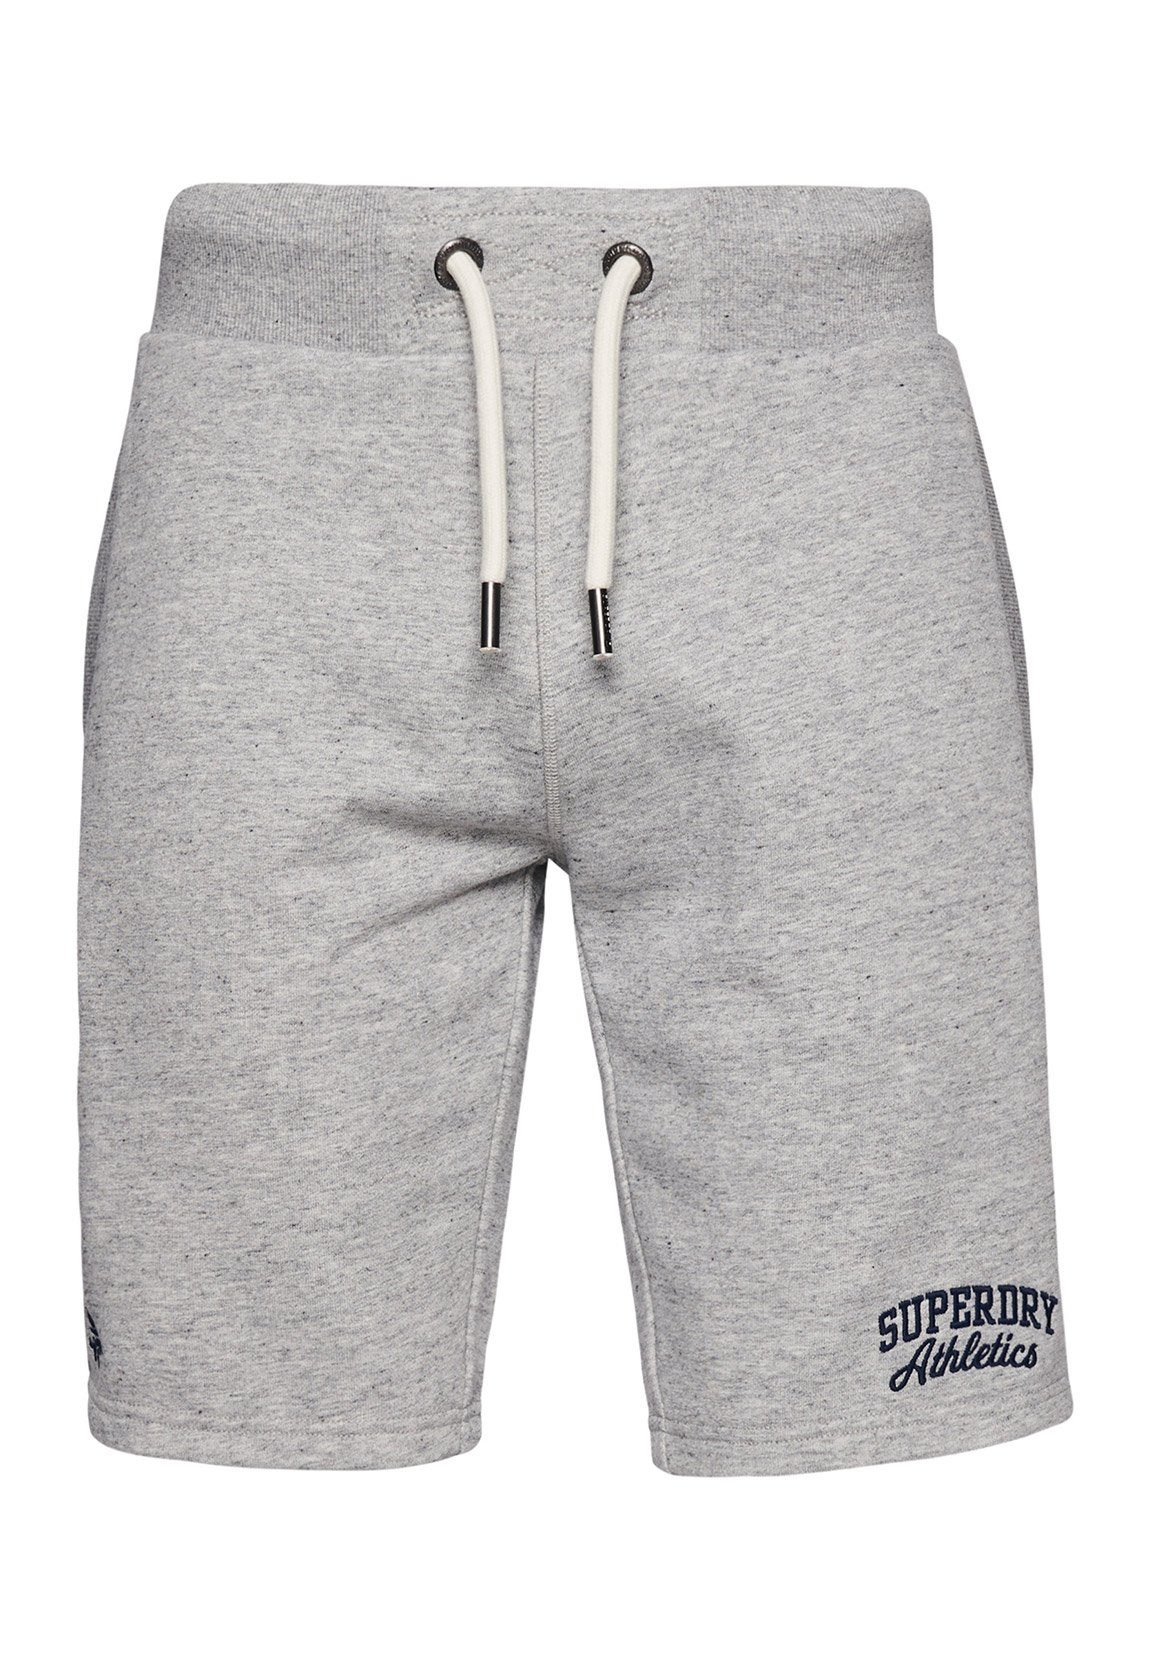 Superdry Shorts Superdry Shorts VINTAGE GYM Hellgrau Grey ATHLETIC Marl Athletic SHORT